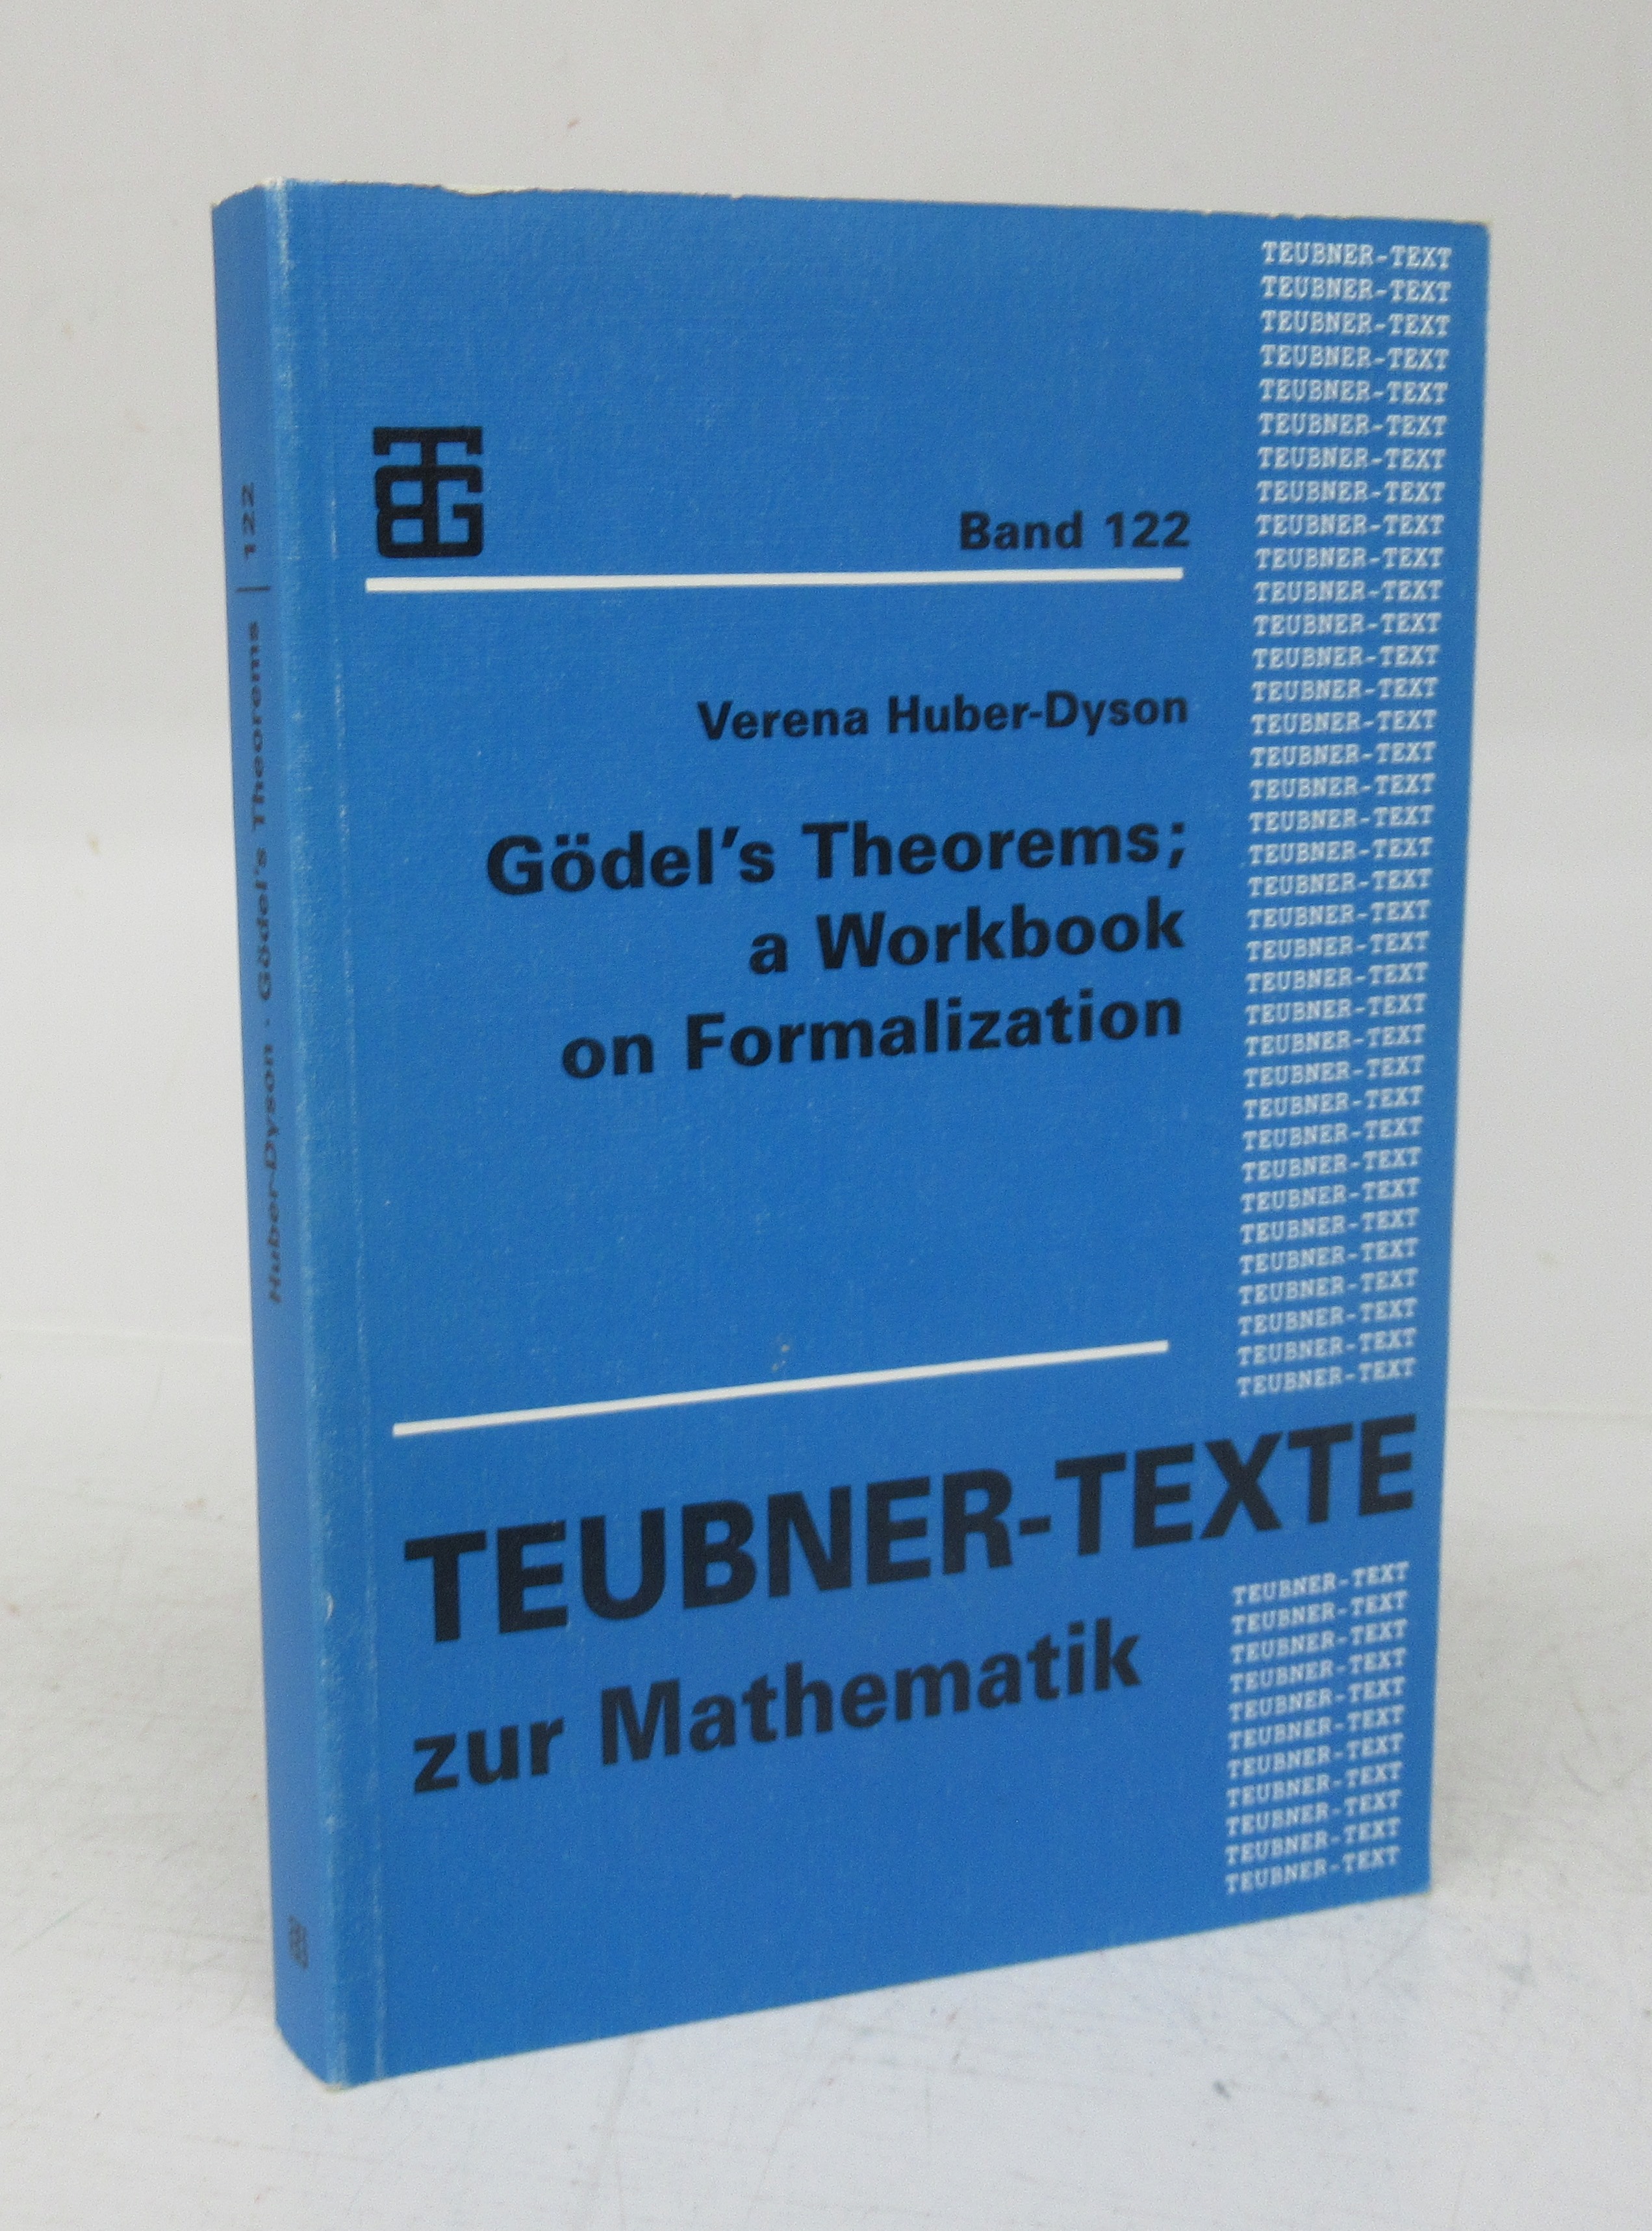 Gödel's Theorems; a Workbook on Formalization - HUBER-DYSON, Verena